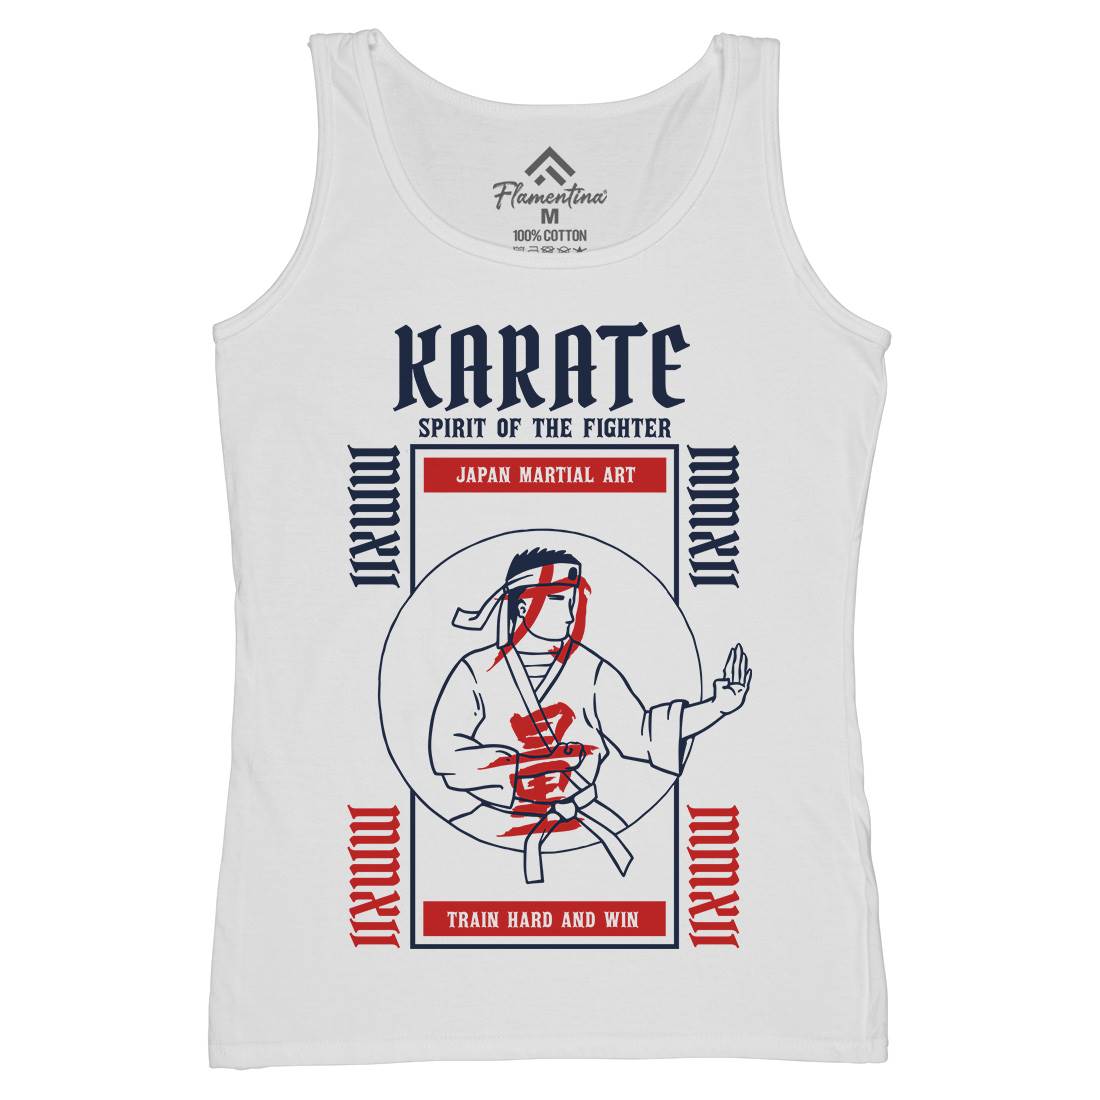 Karate Womens Organic Tank Top Vest Sport C738